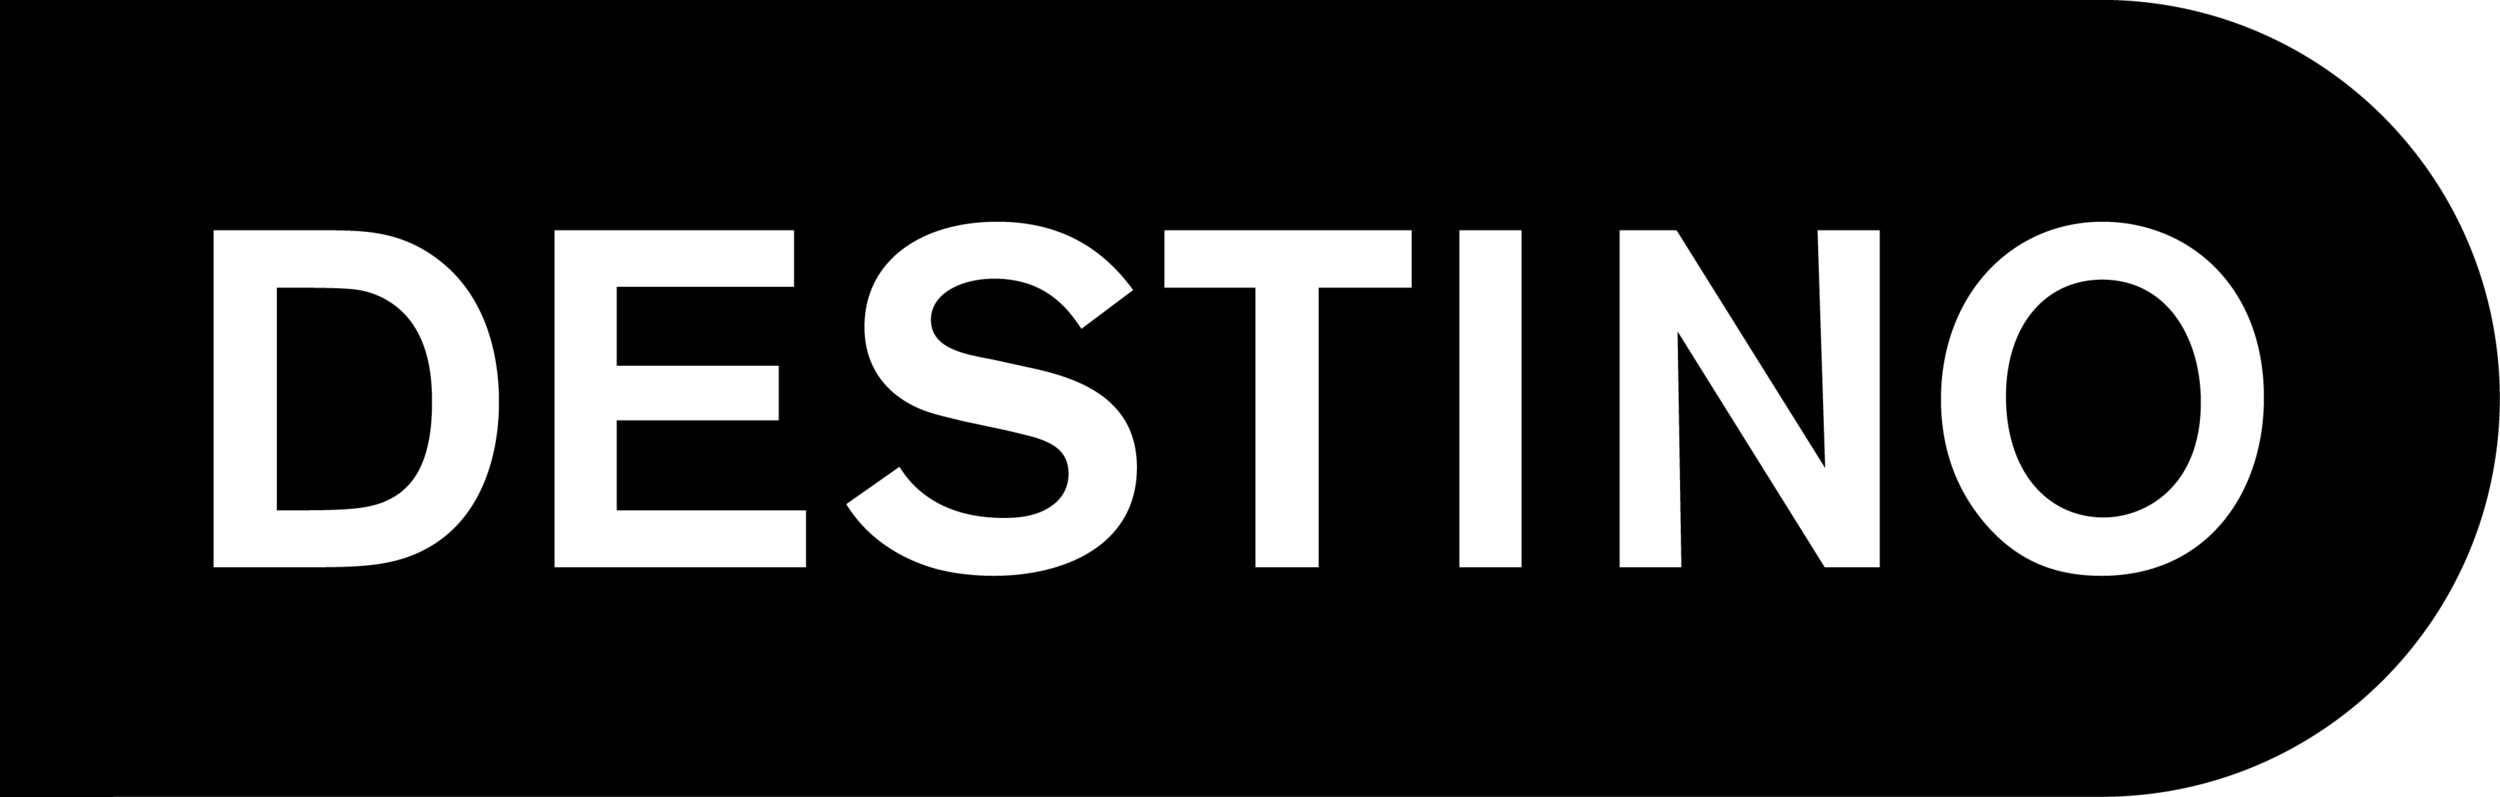 Logo Destino.png